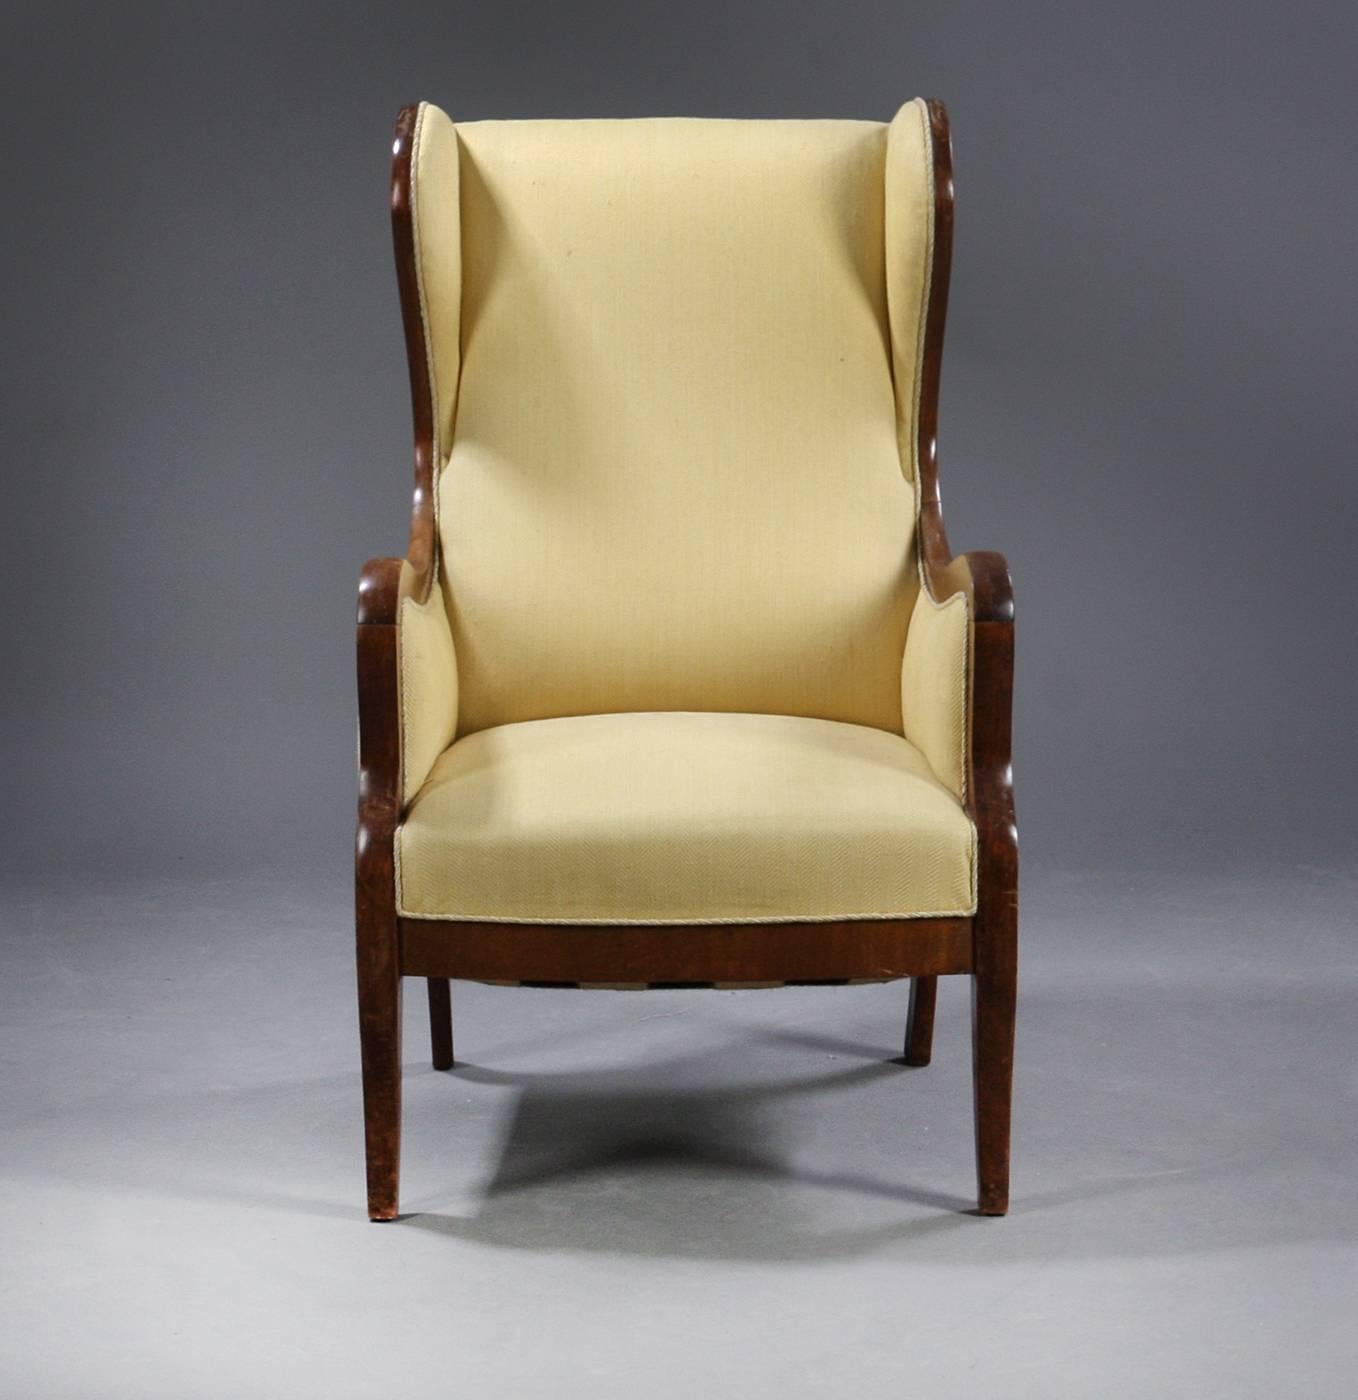 Scandinavian Modern Frits Henningsen Wingback Chair in Mahogany and Wool, Denmark 1940s